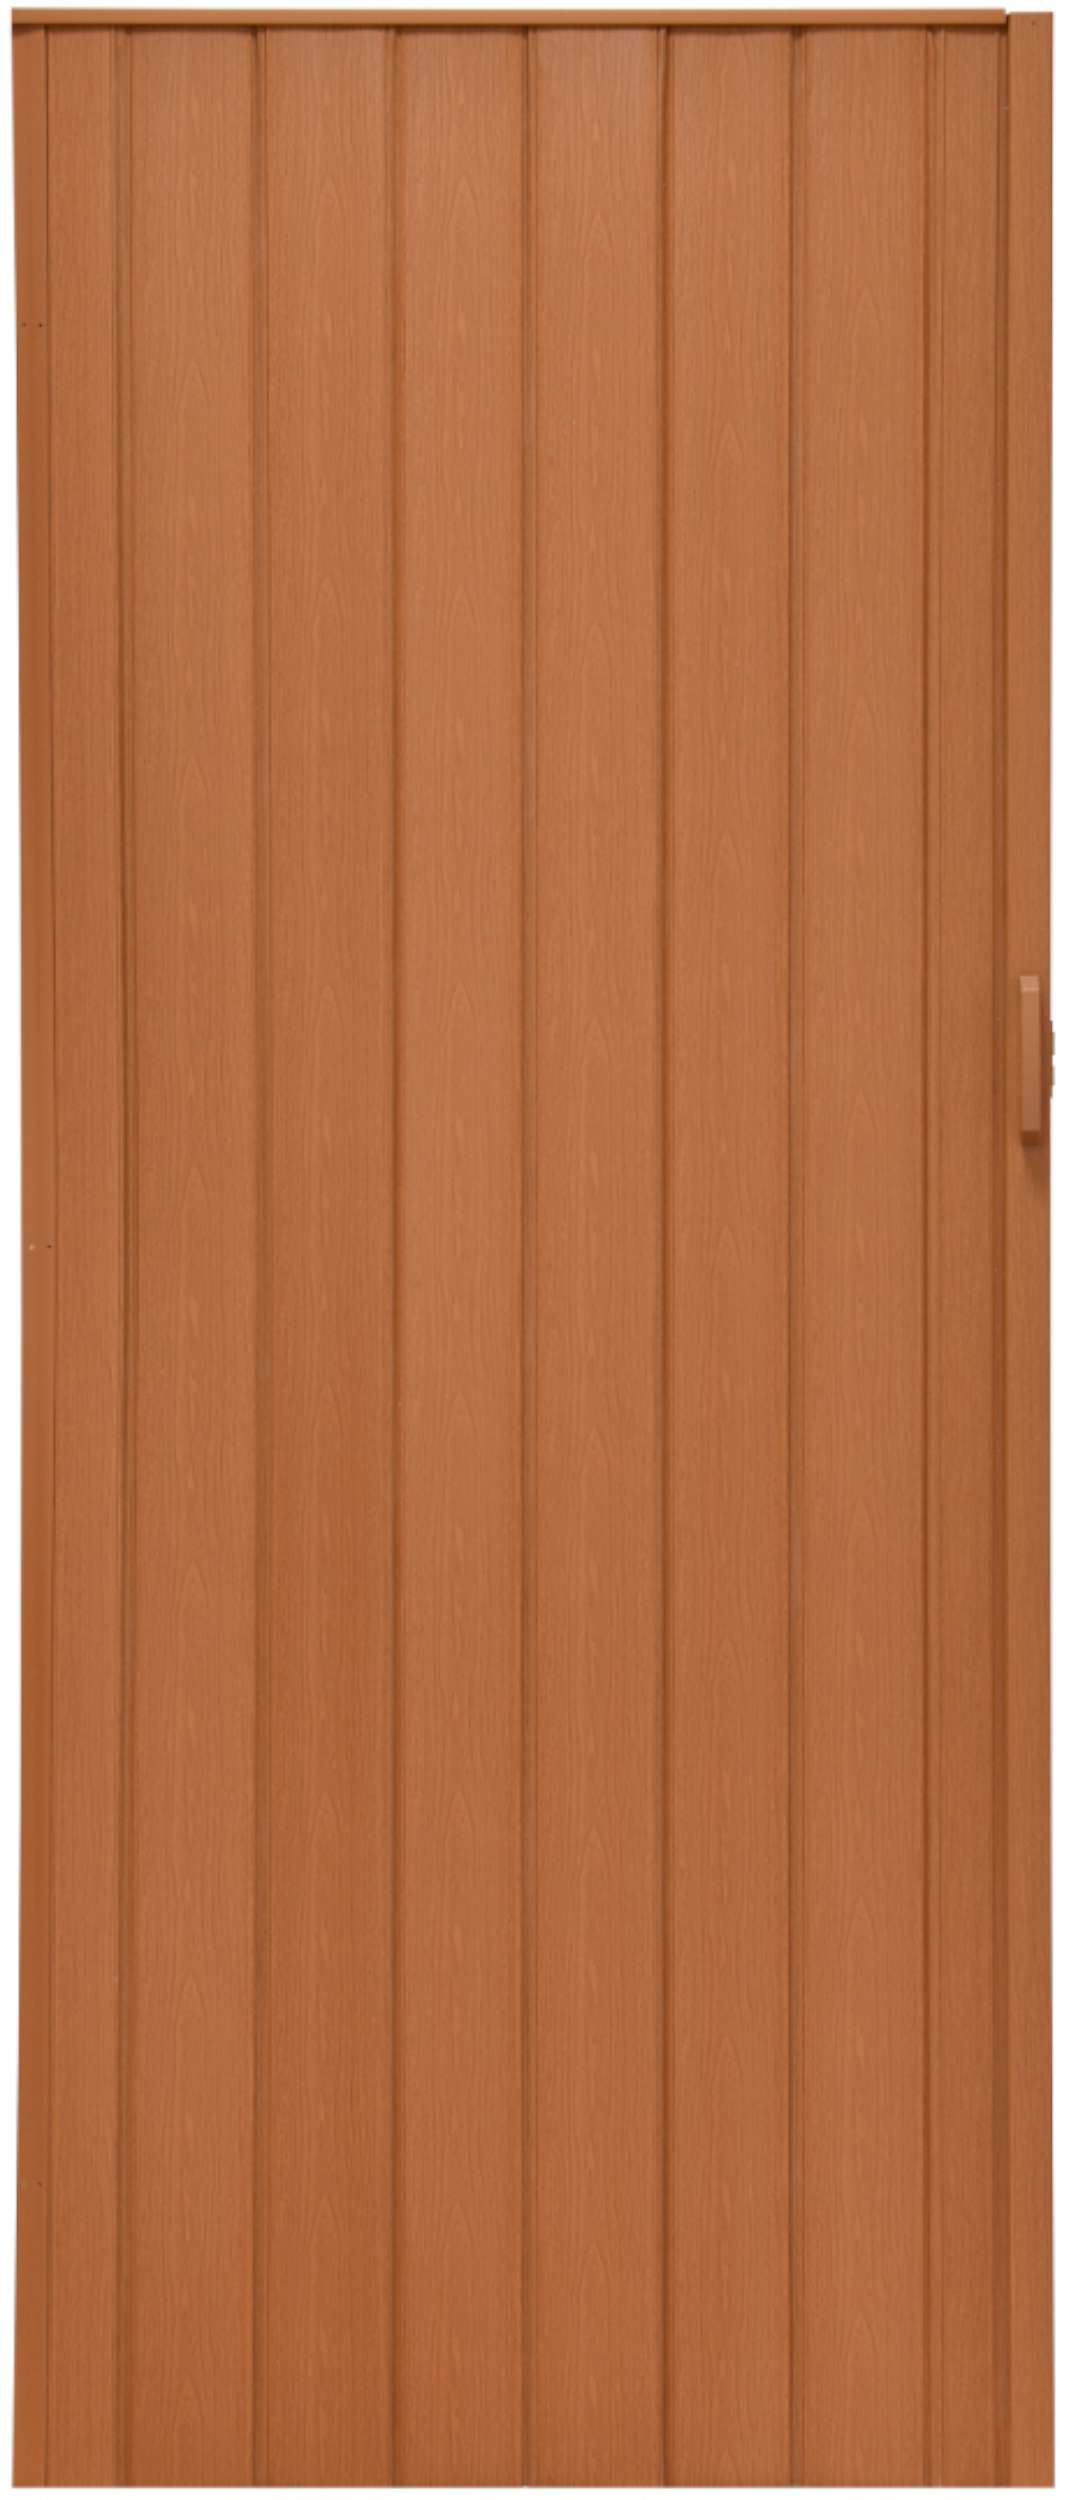 Drzwi Harmonijkowe 004 Calvados 90 cm